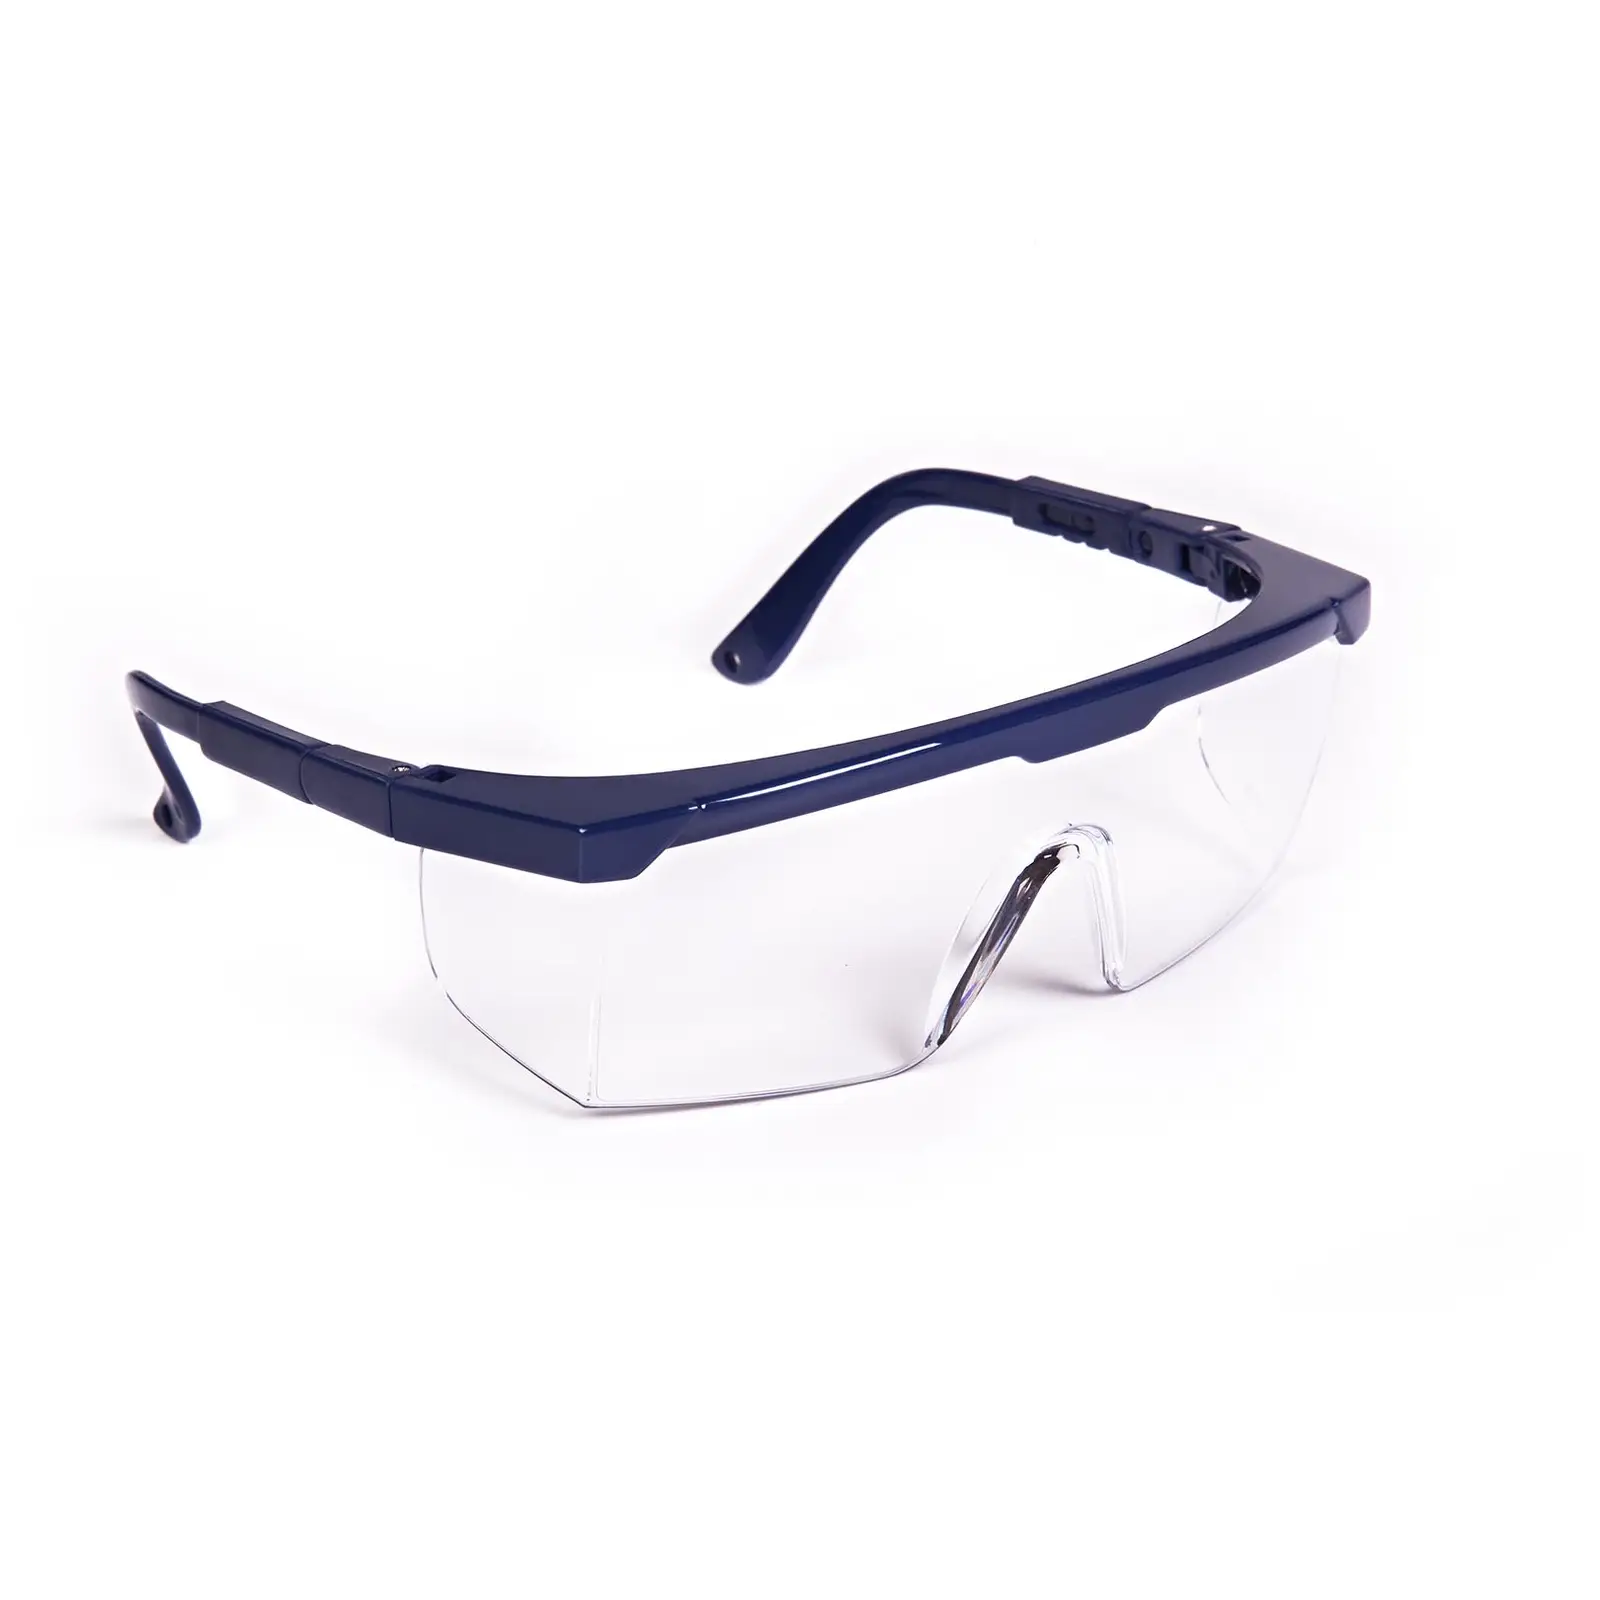 TECTOR okulary ochronne - przezroczyste - EN 166 - regulowane